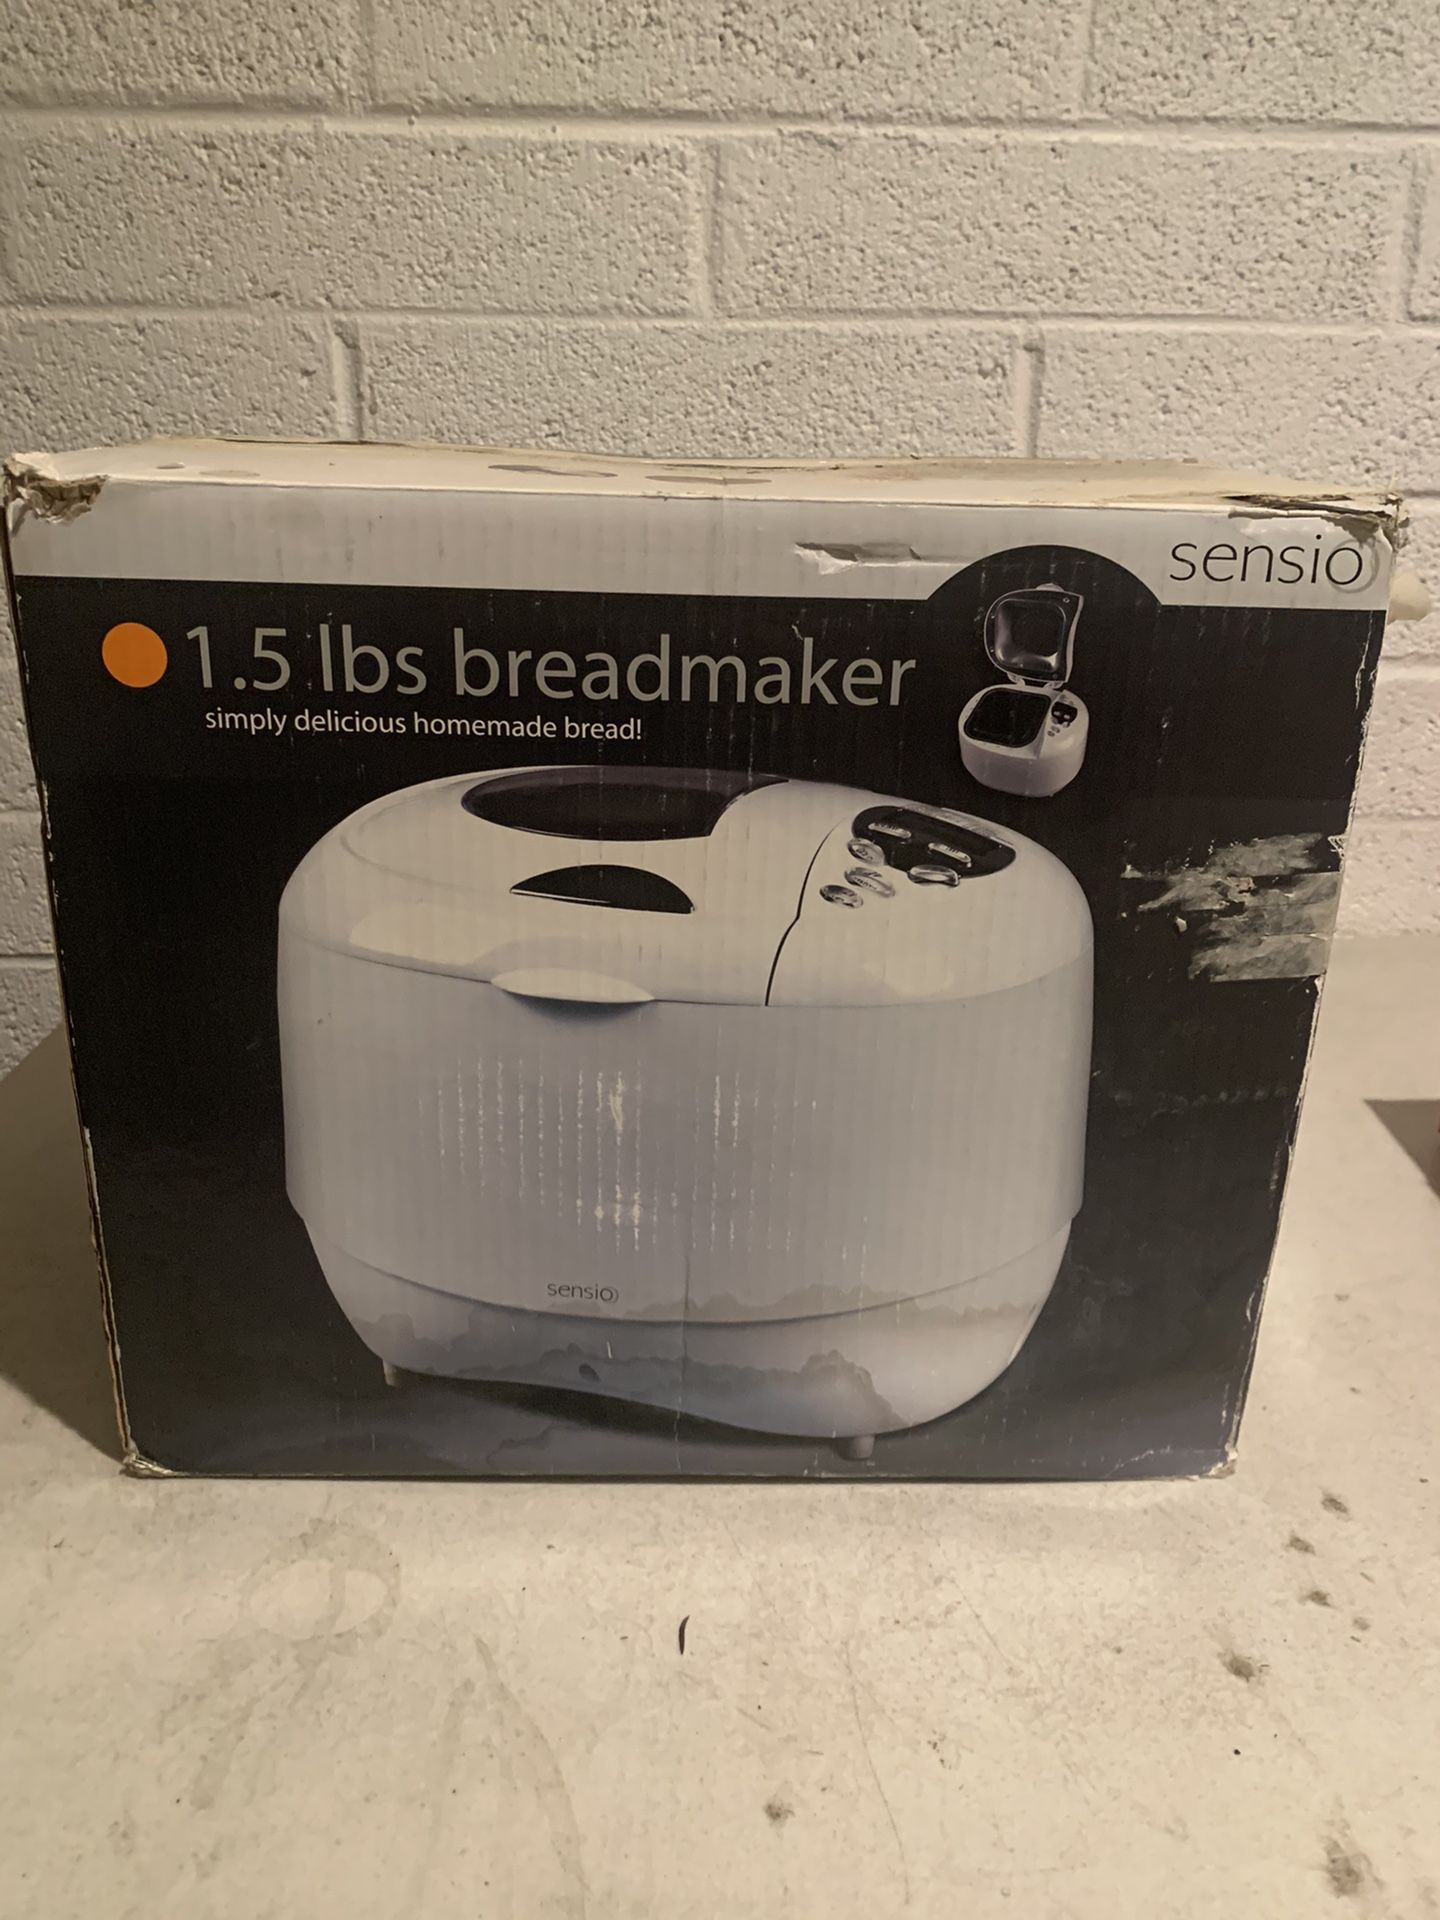 Bread maker brand new never used